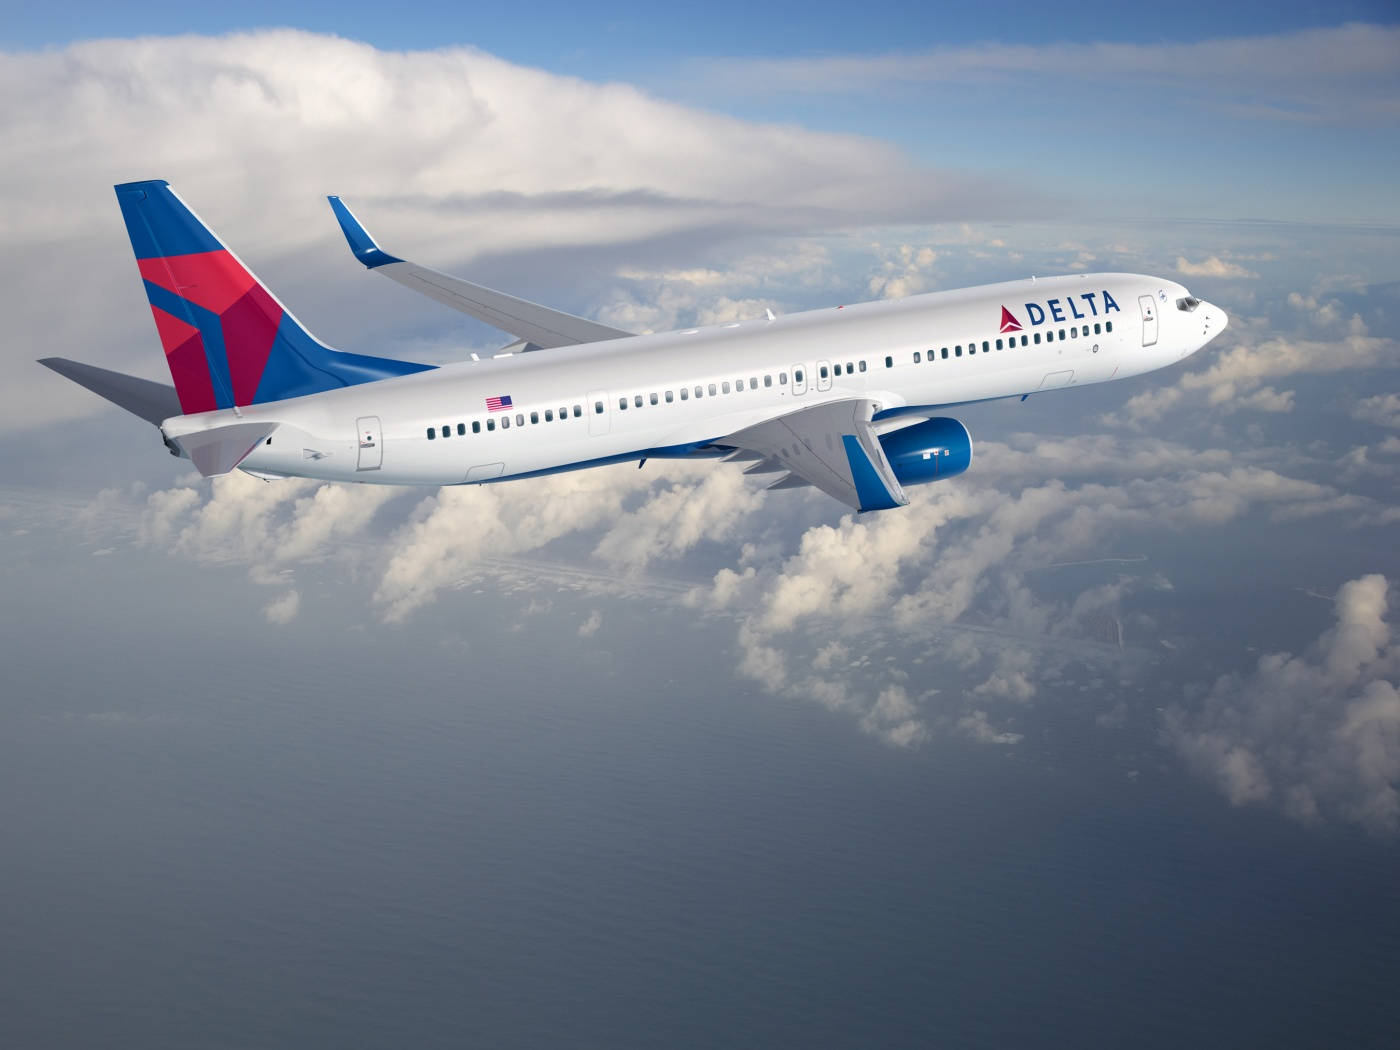 Aviãoda Delta Airlines Voando Acima Das Nuvens. Papel de Parede